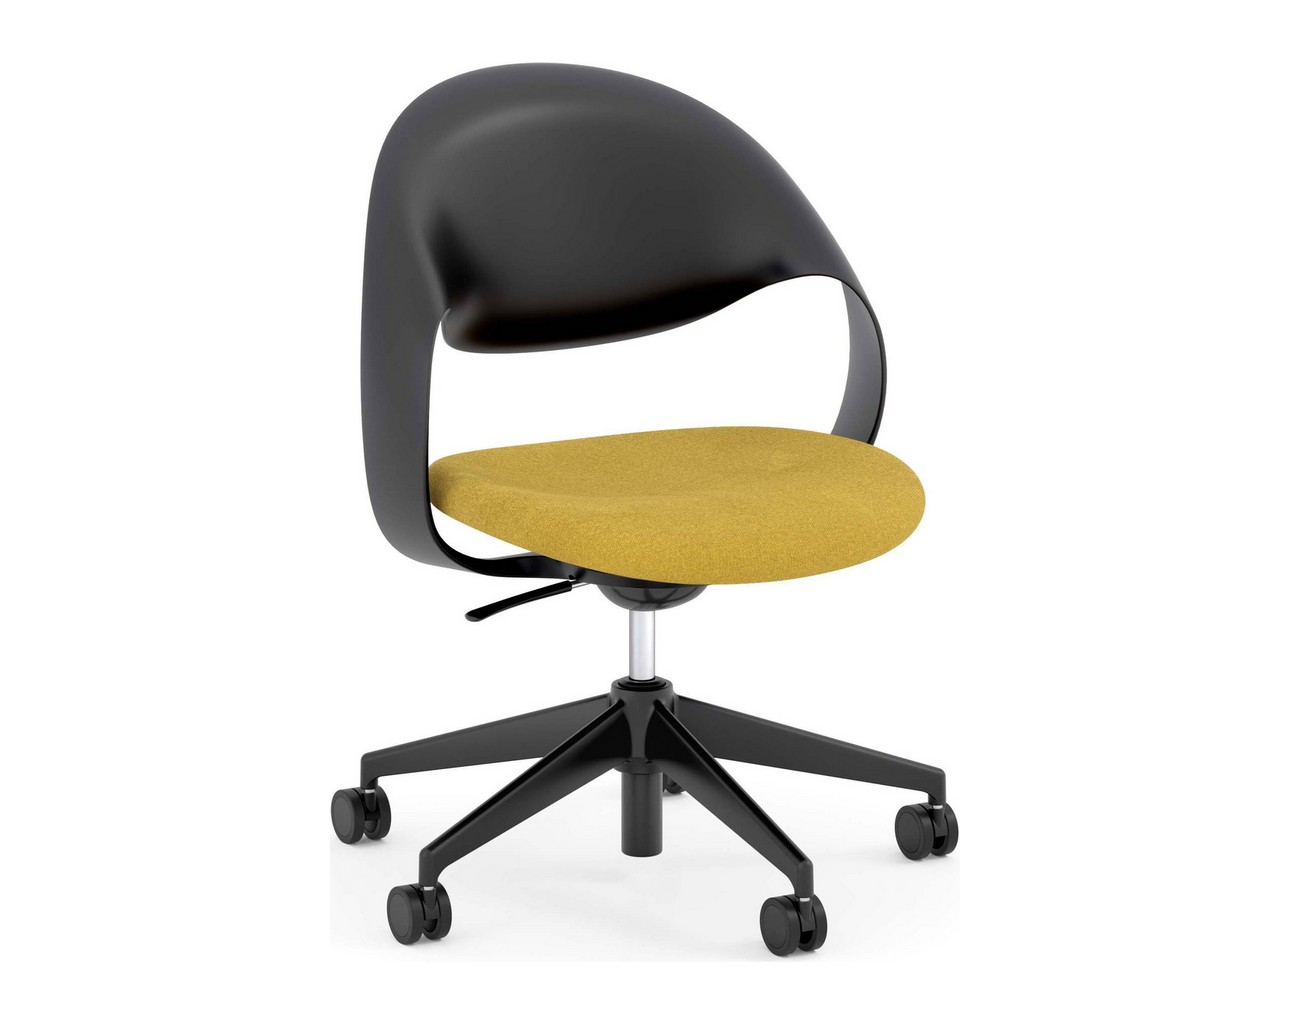 Loop Multi-Purpose Chair – Black Frame with Mustard Seat